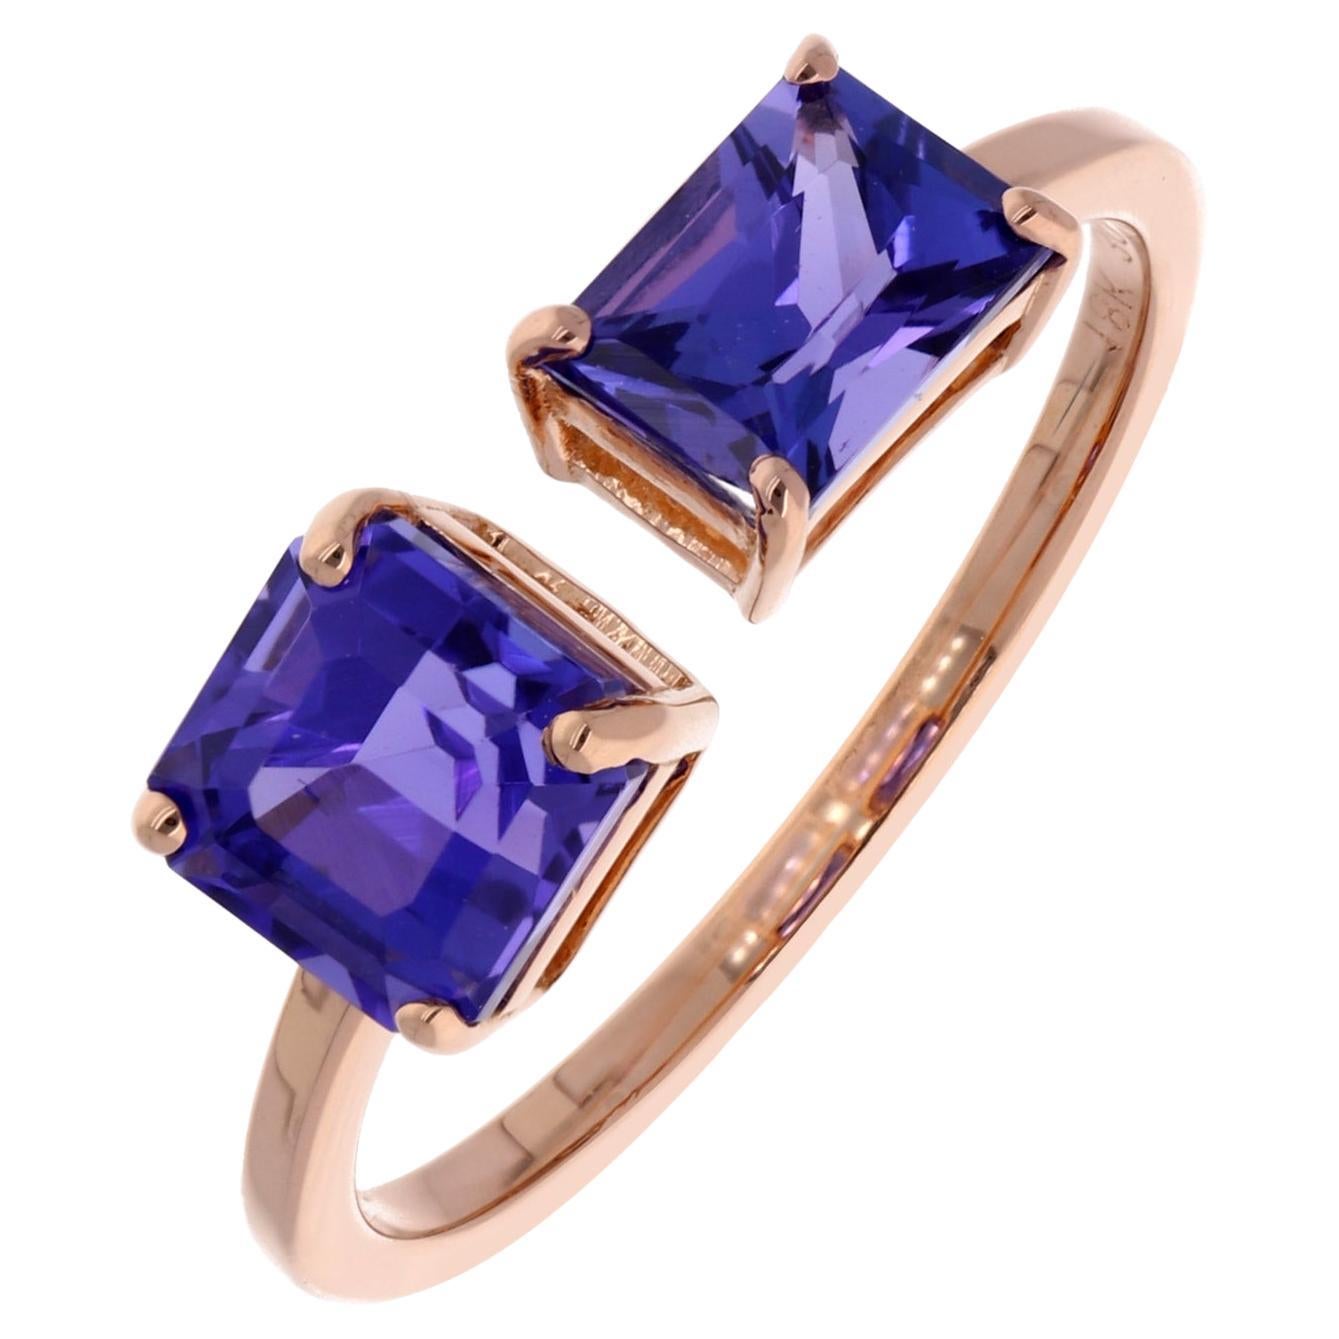 For Sale:  2.64 Carat Tanzanite Gemstone Cuff Ring Solid 18 Karat Rose Gold Fine Jewelry